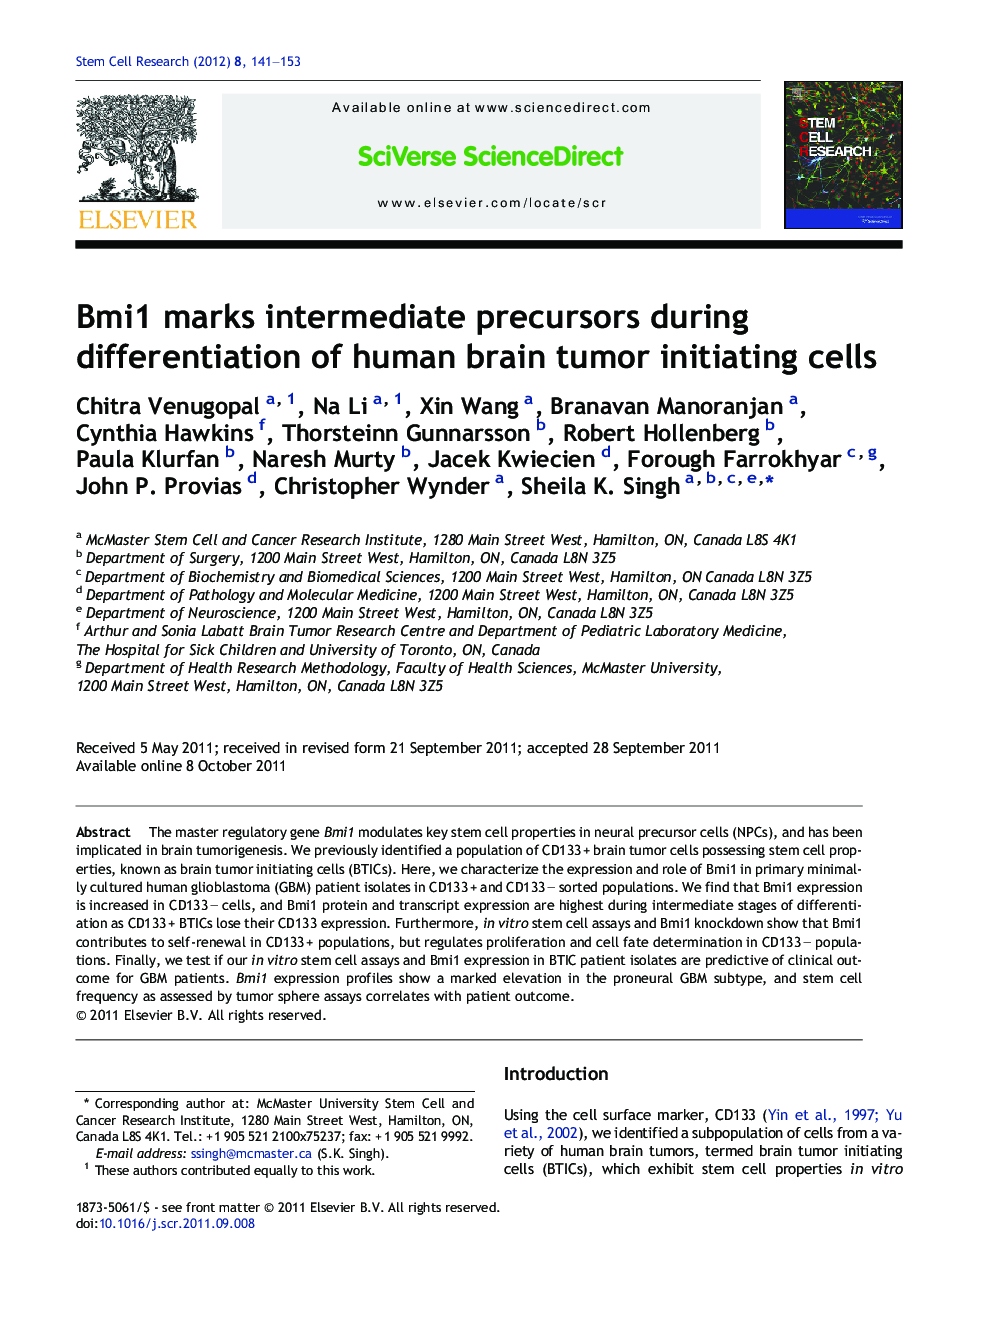 Bmi1 marks intermediate precursors during differentiation of human brain tumor initiating cells